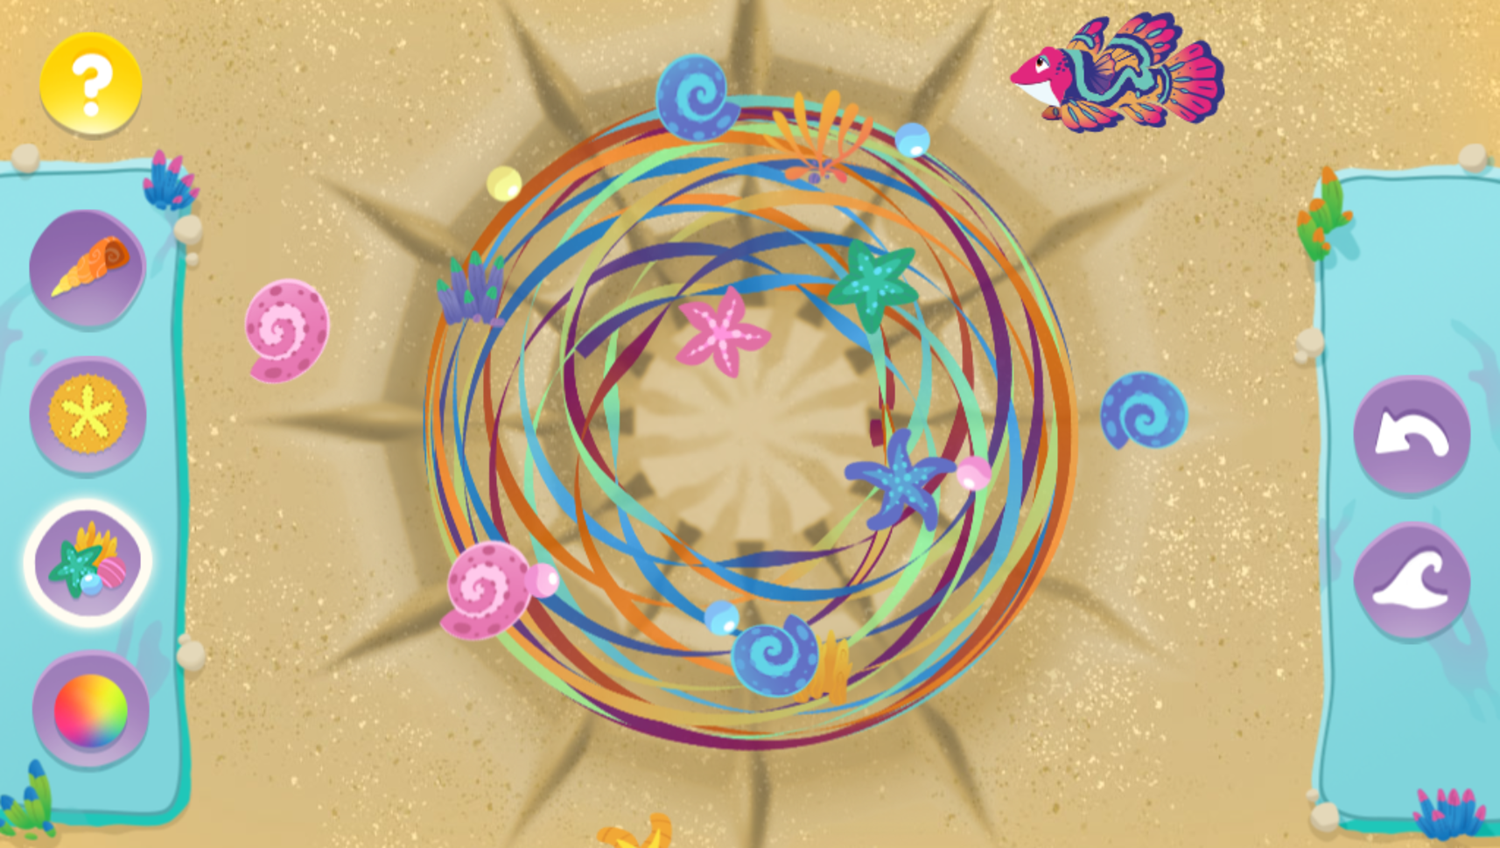 Splash and Bubbles Sand Art Spectacular Game Final Layout Screenshot.